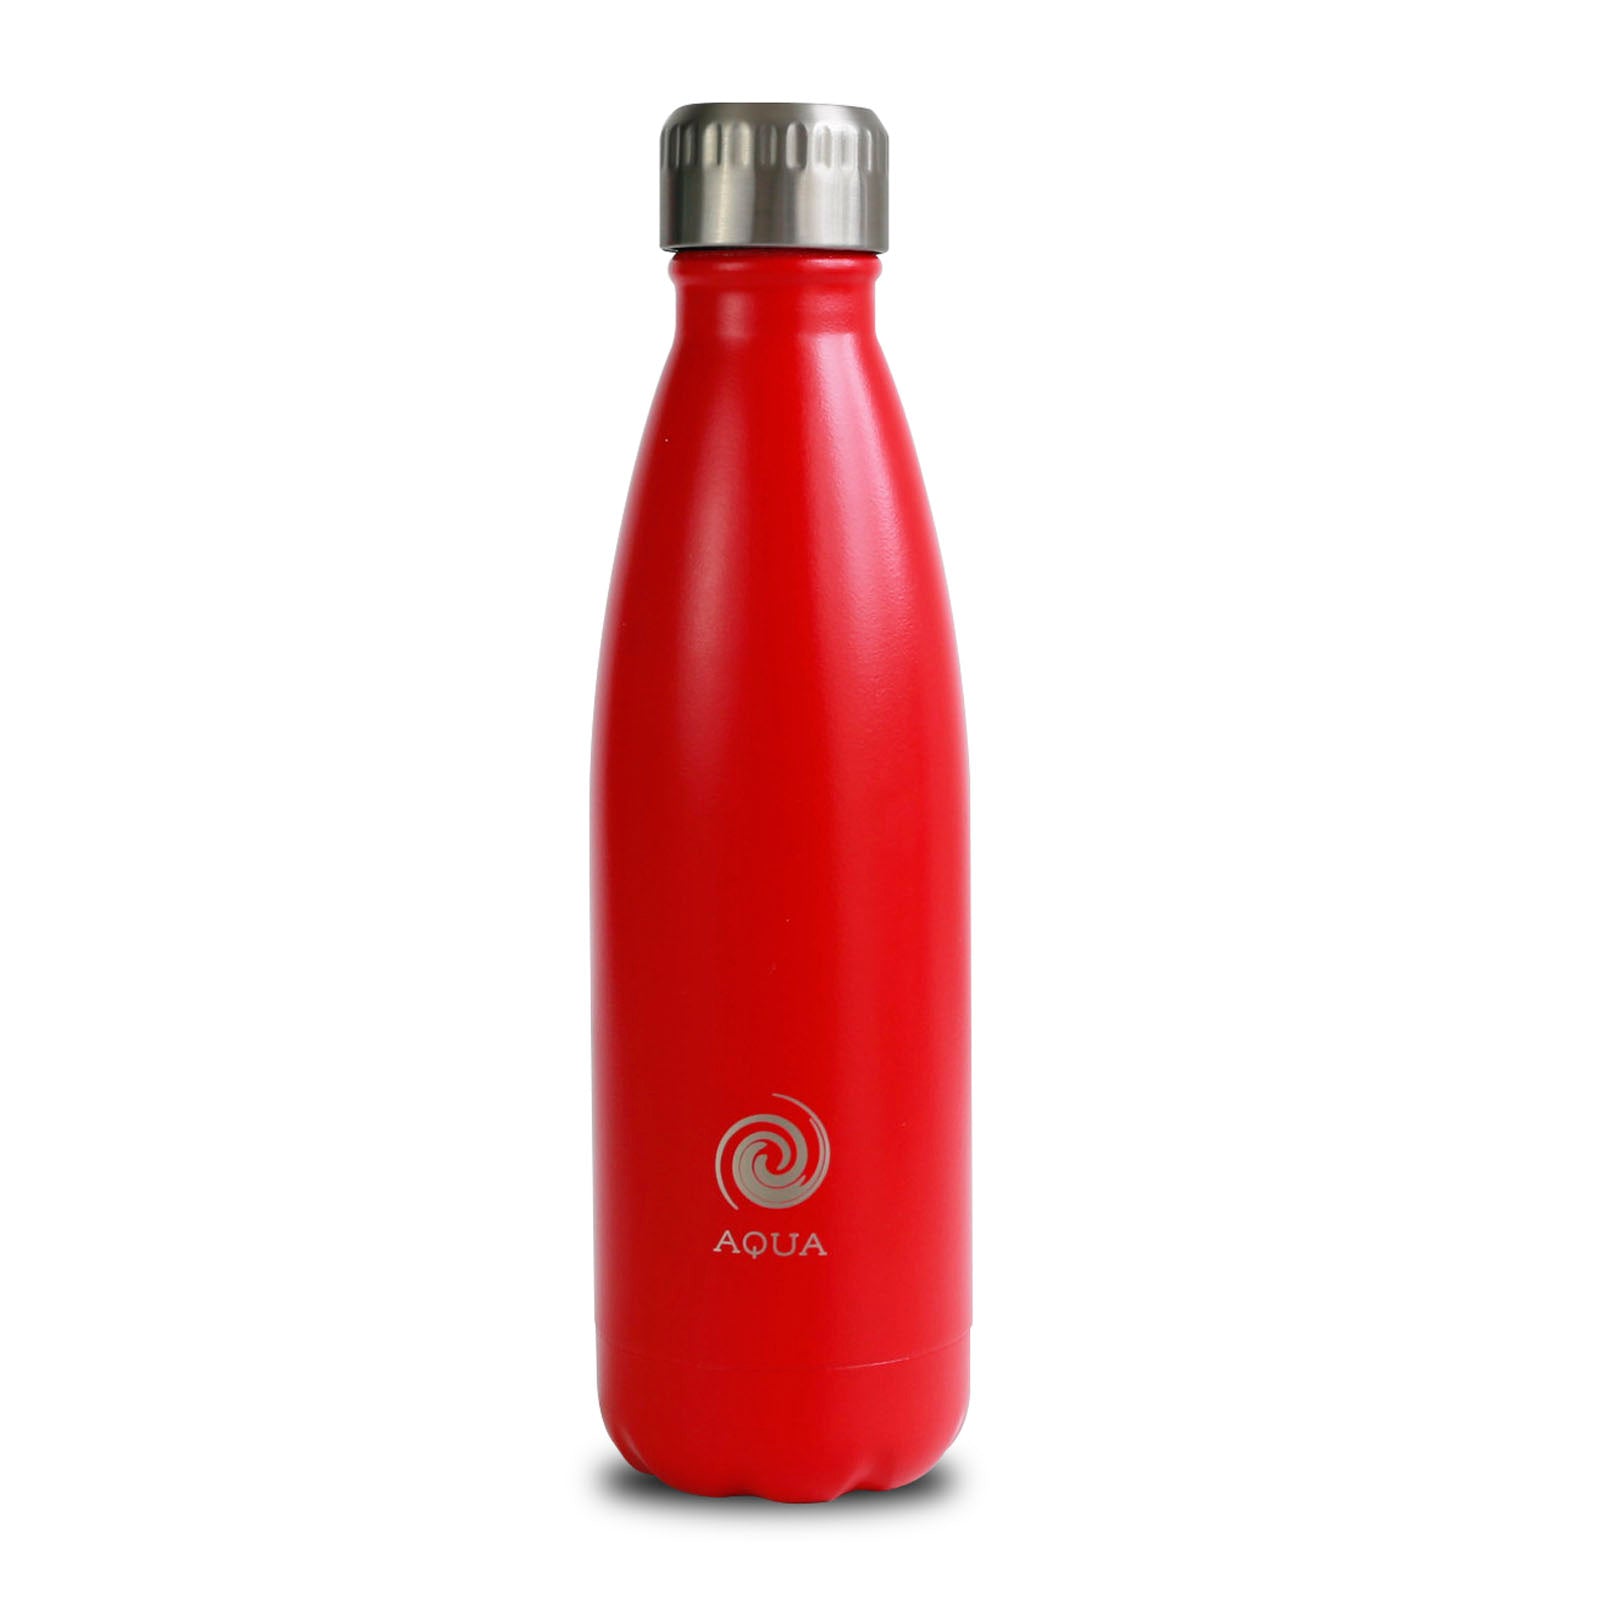 500ml red aqua bottle | Aquabottle.co.uk